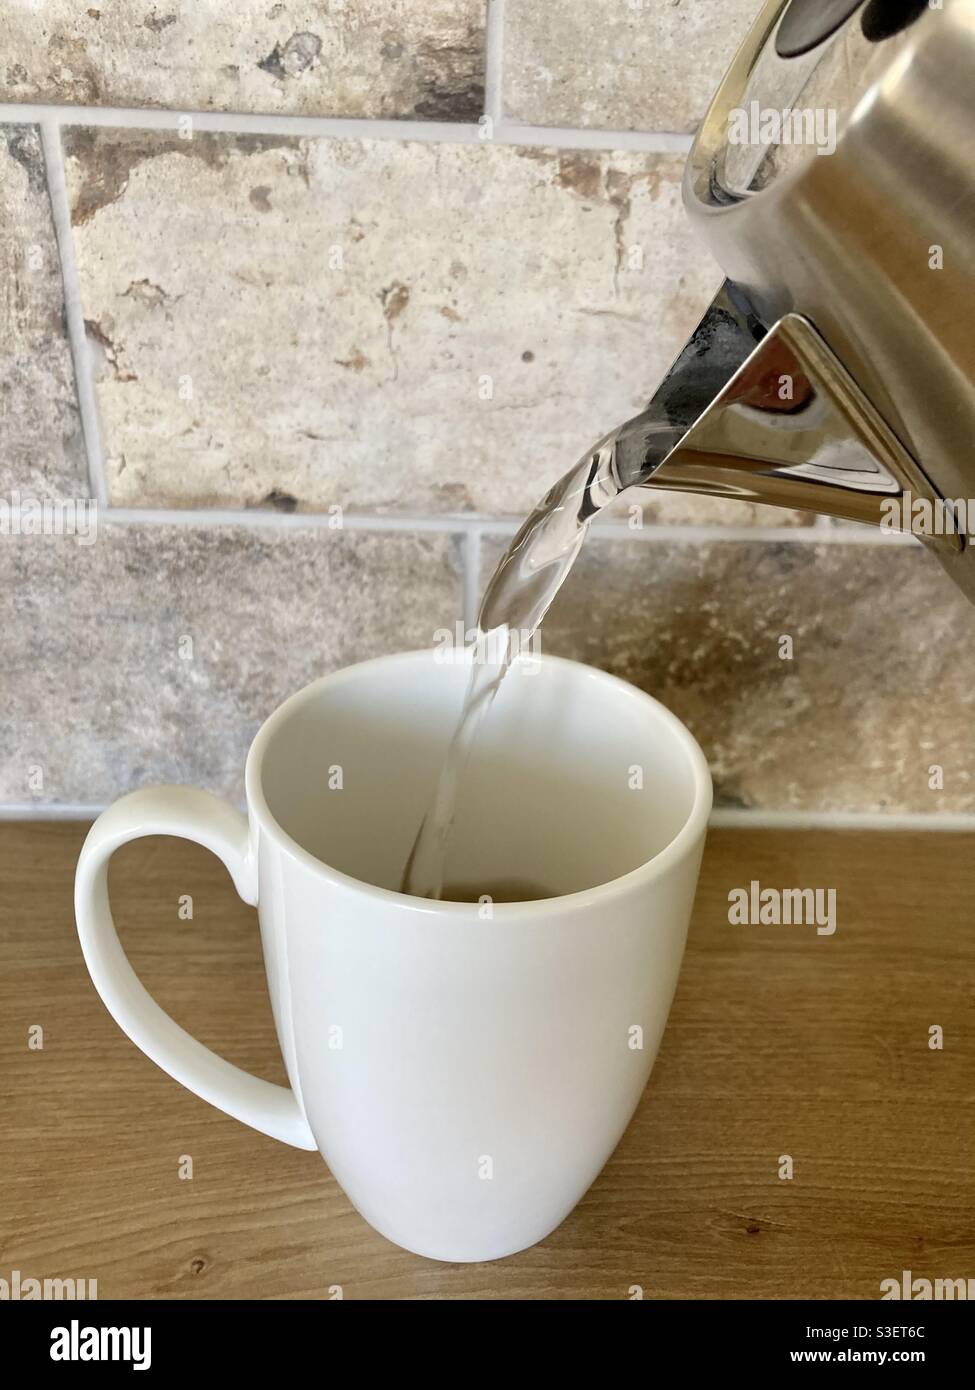 Pouring hot water into a white mug to make tea Stock Photo